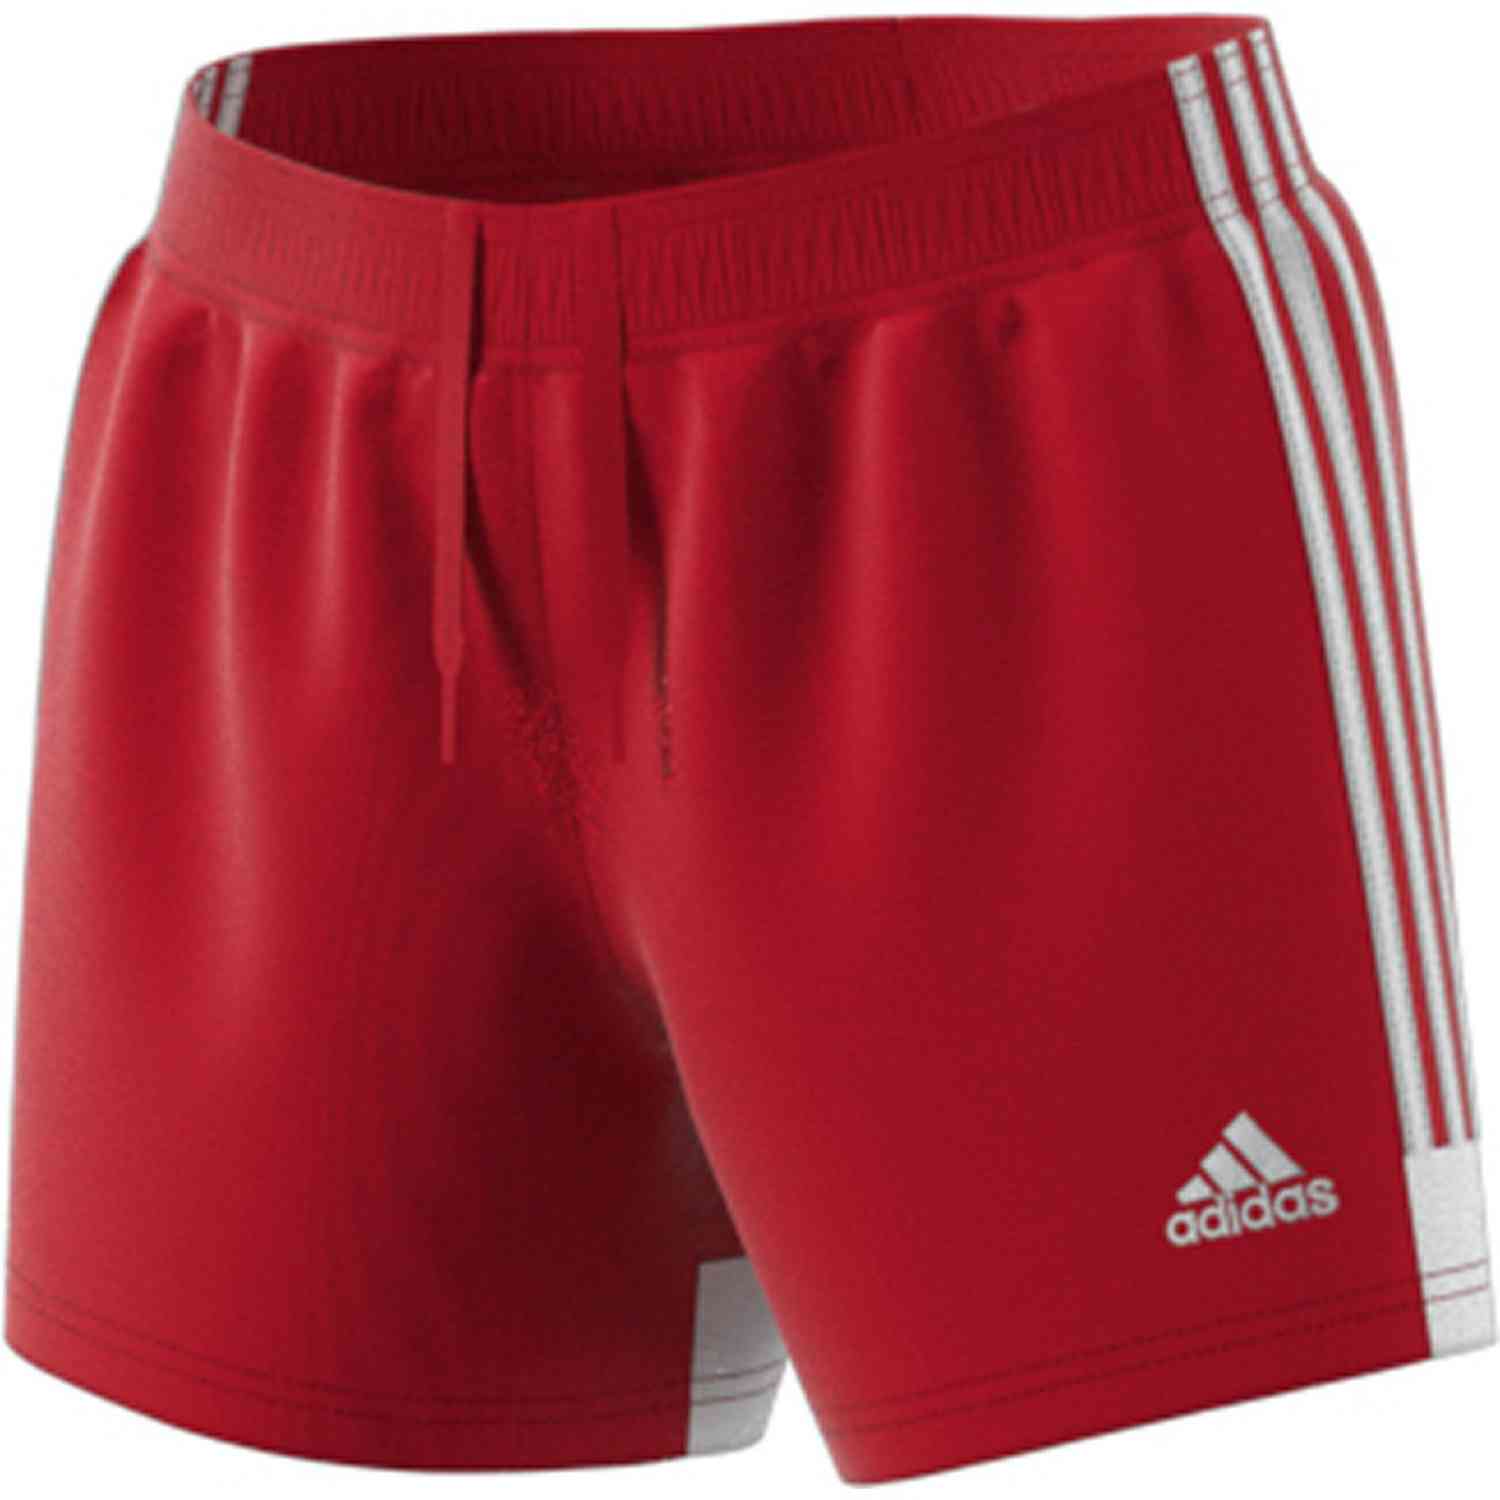 womens red adidas shorts